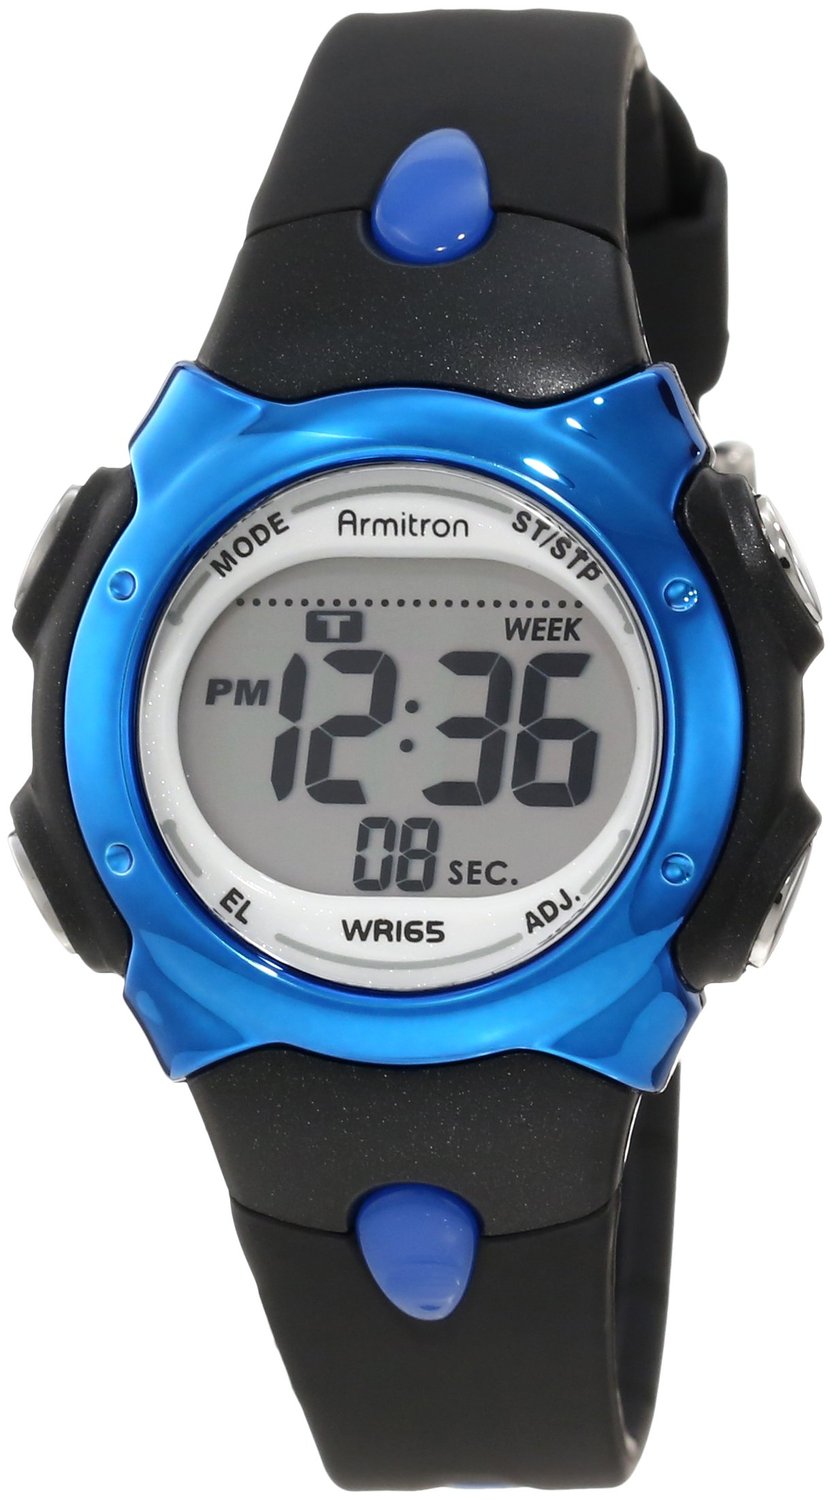 Armitron pro sport digital watch manual download